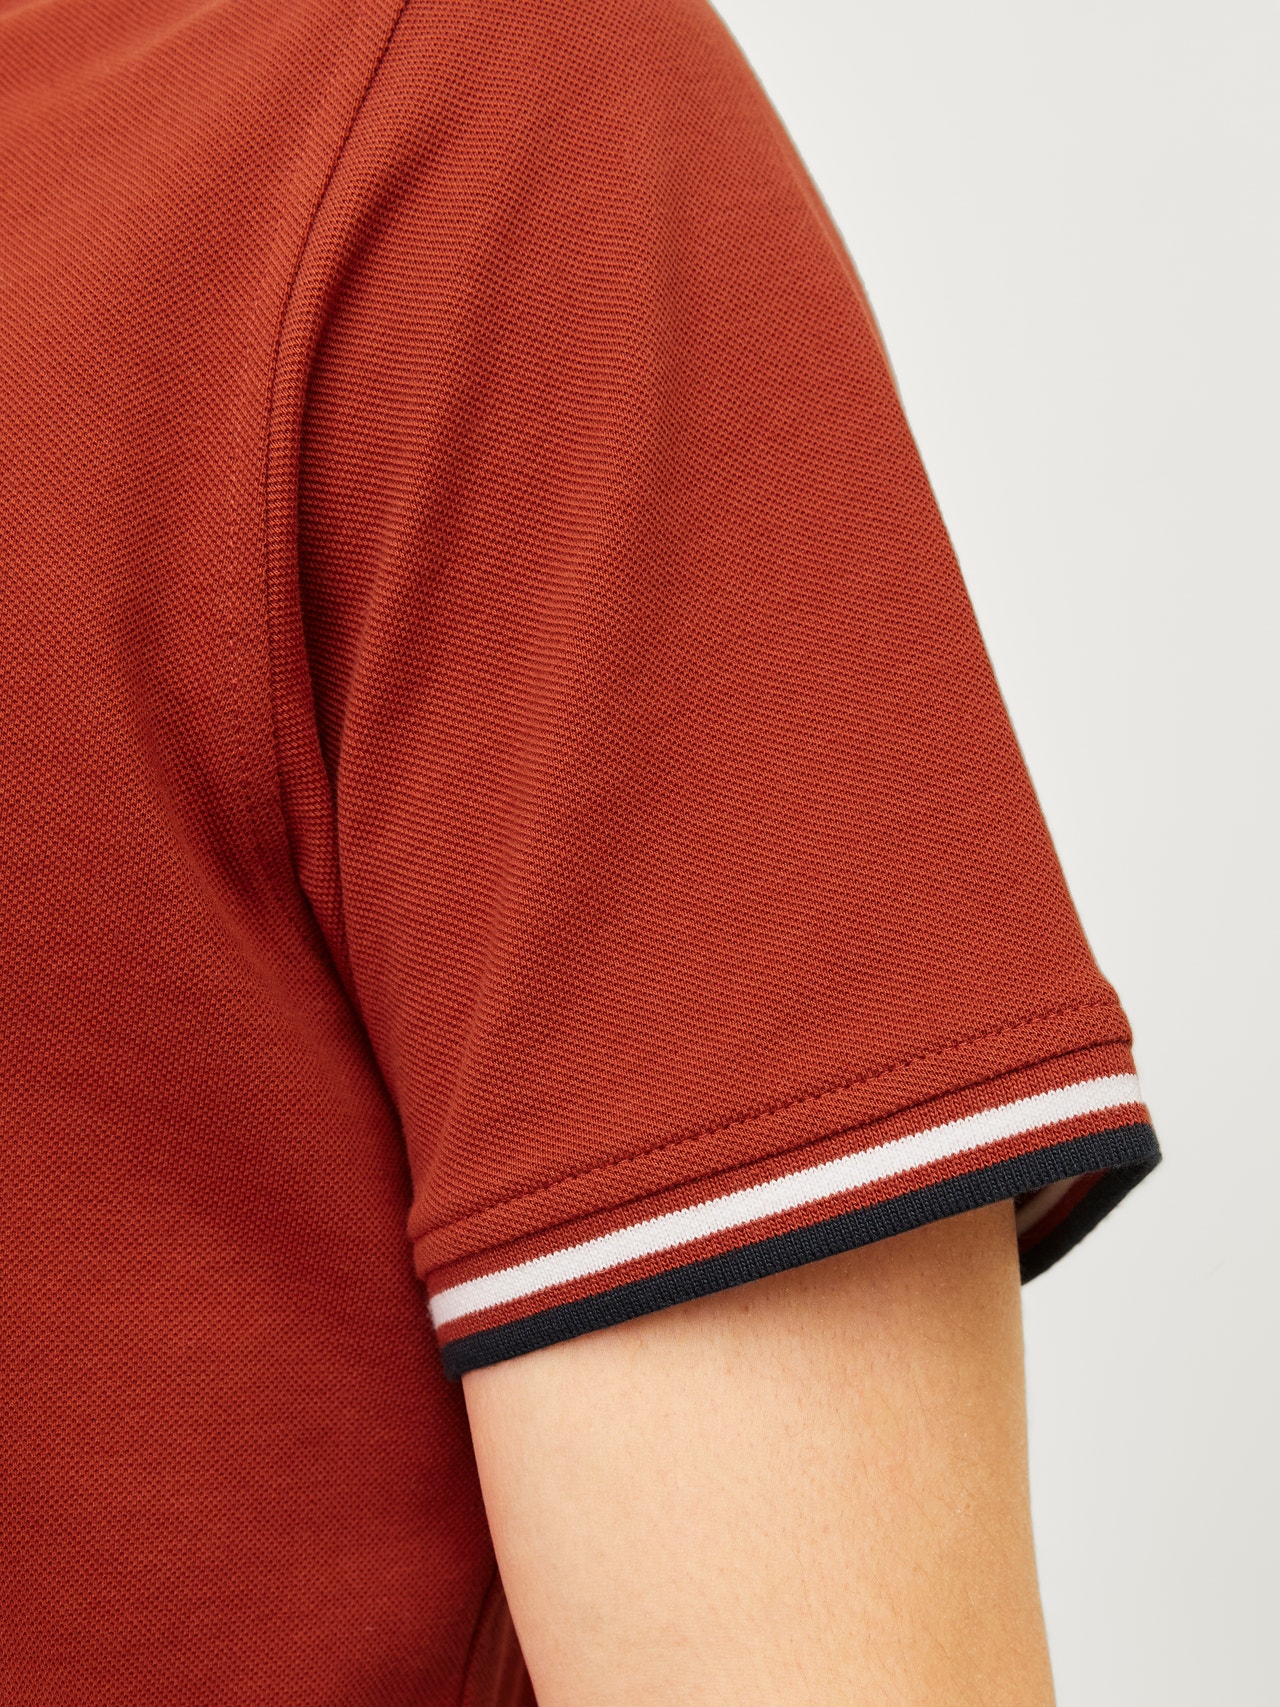 Jack & Jones T-shirt Uni Polo -Red Ochre - 12136668